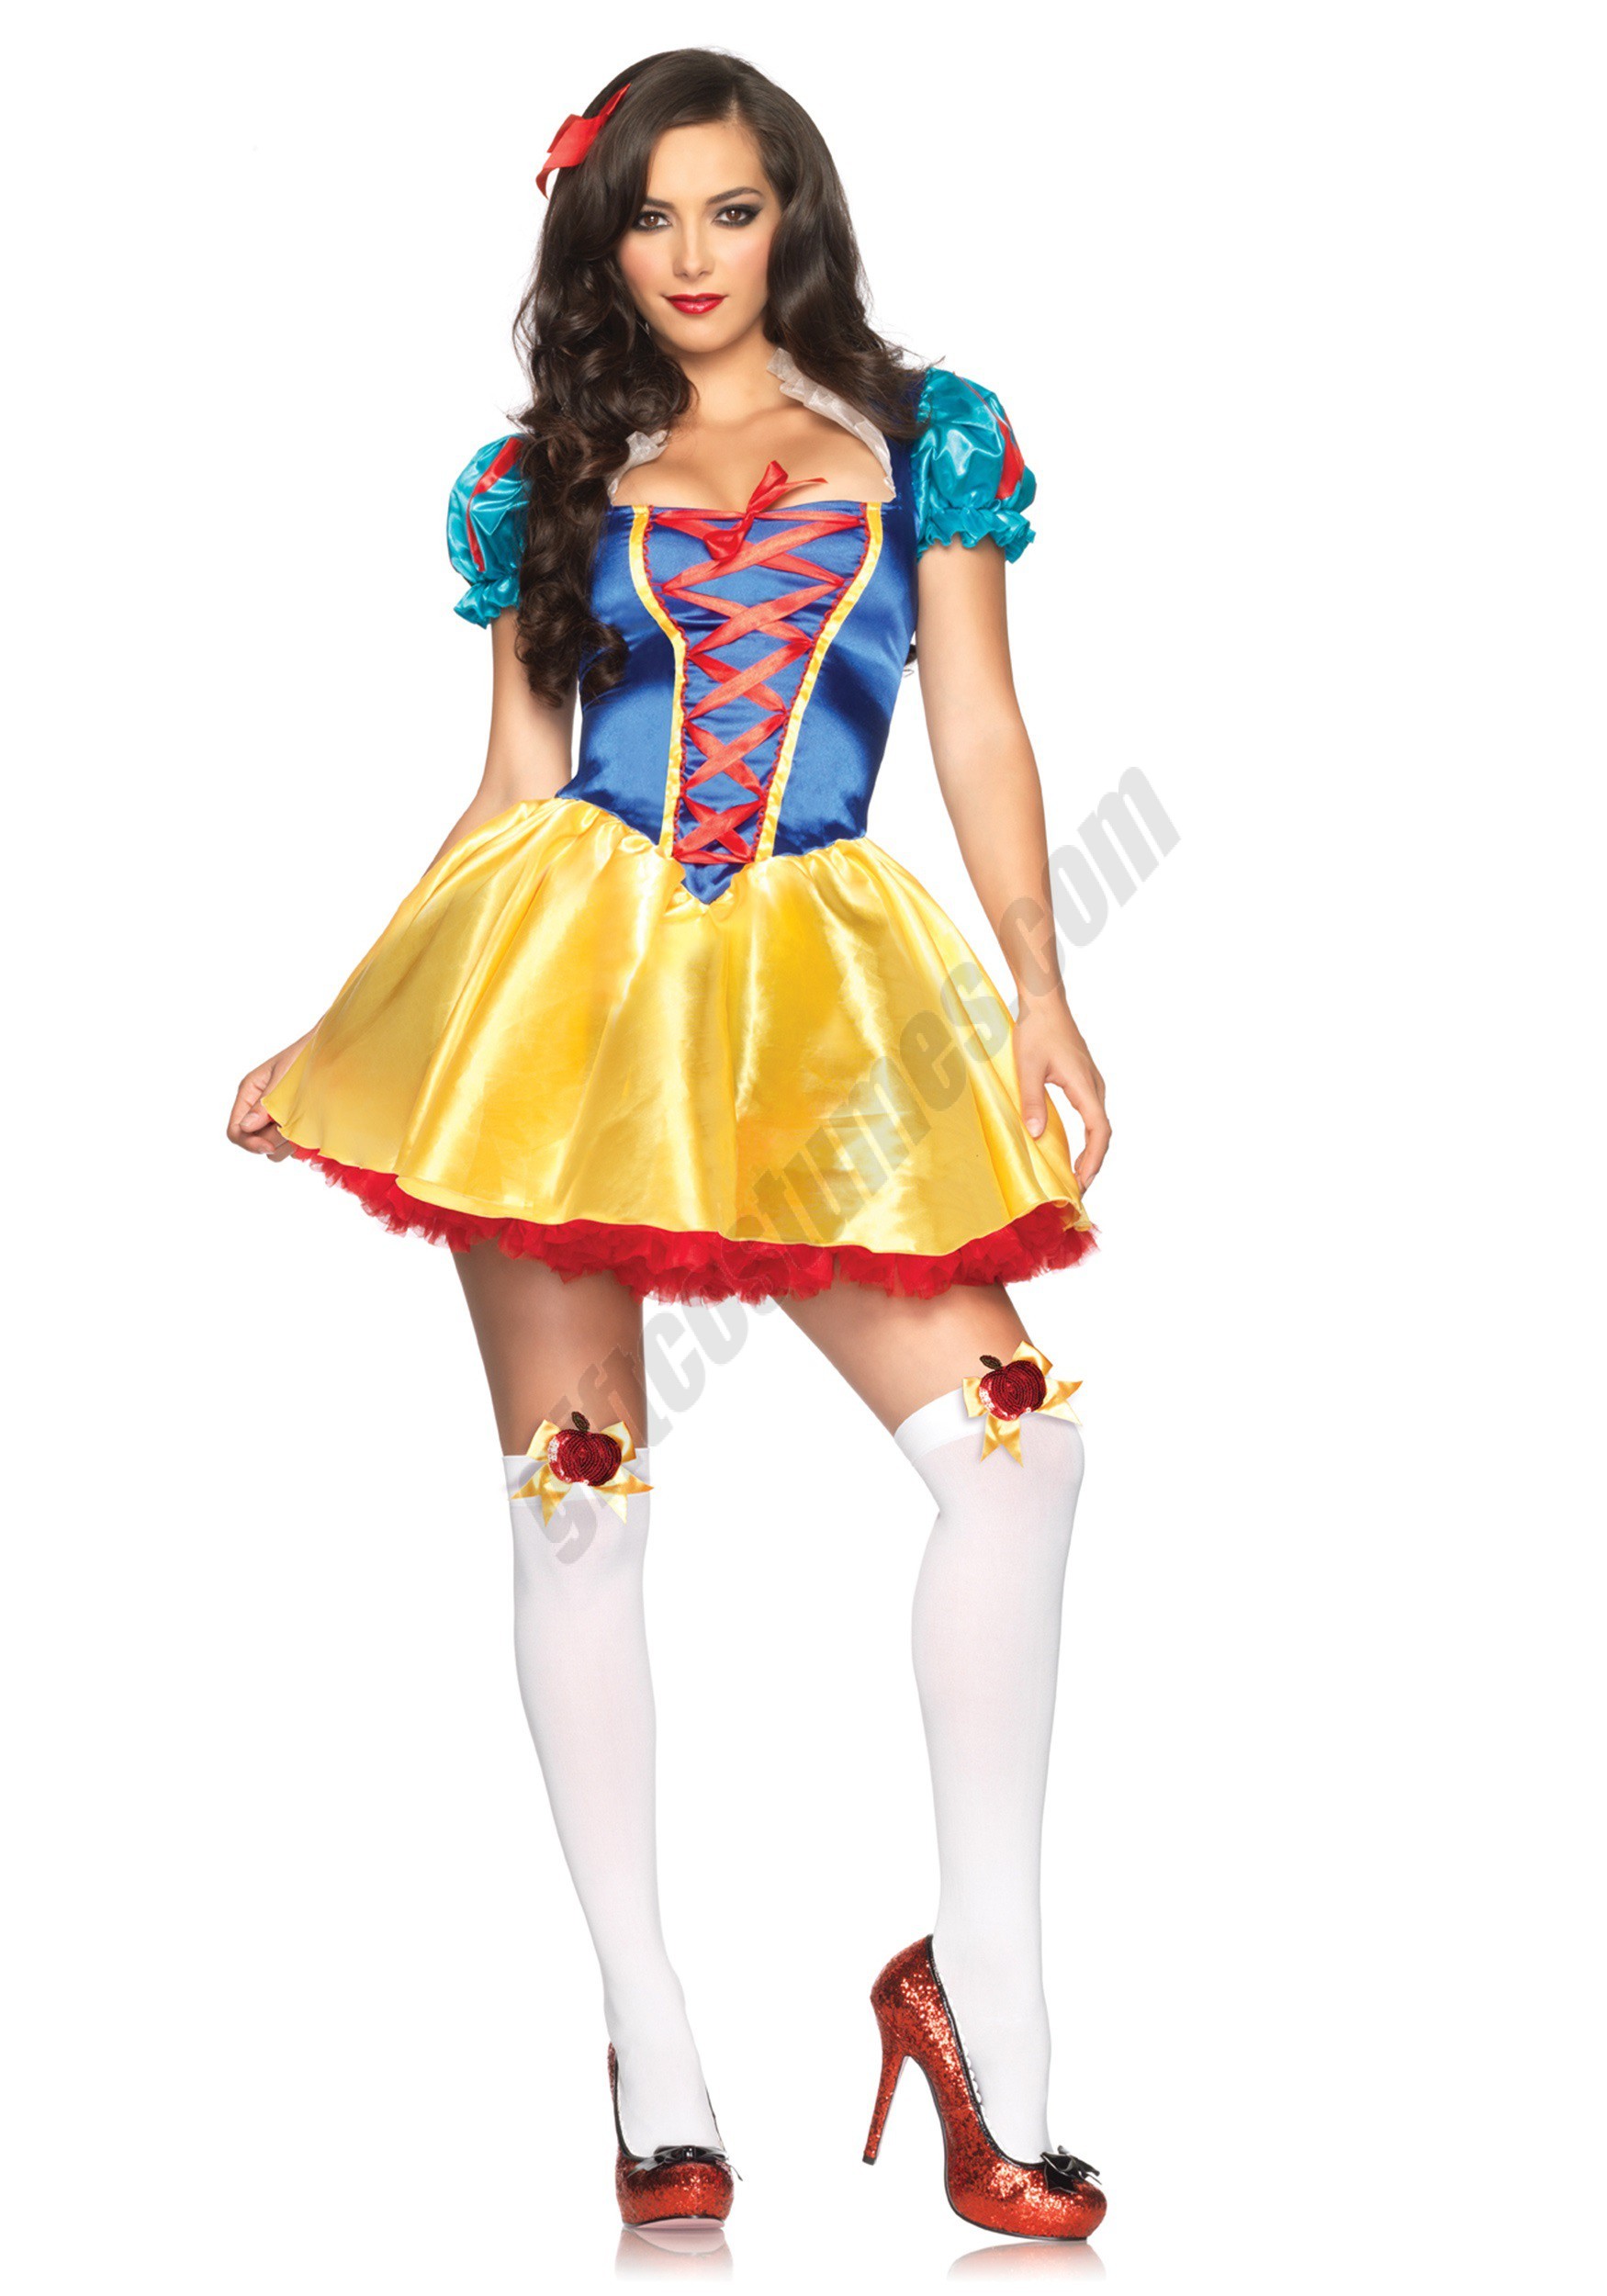 Fairytale Snow White Costume - Women's - Fairytale Snow White Costume - Women's